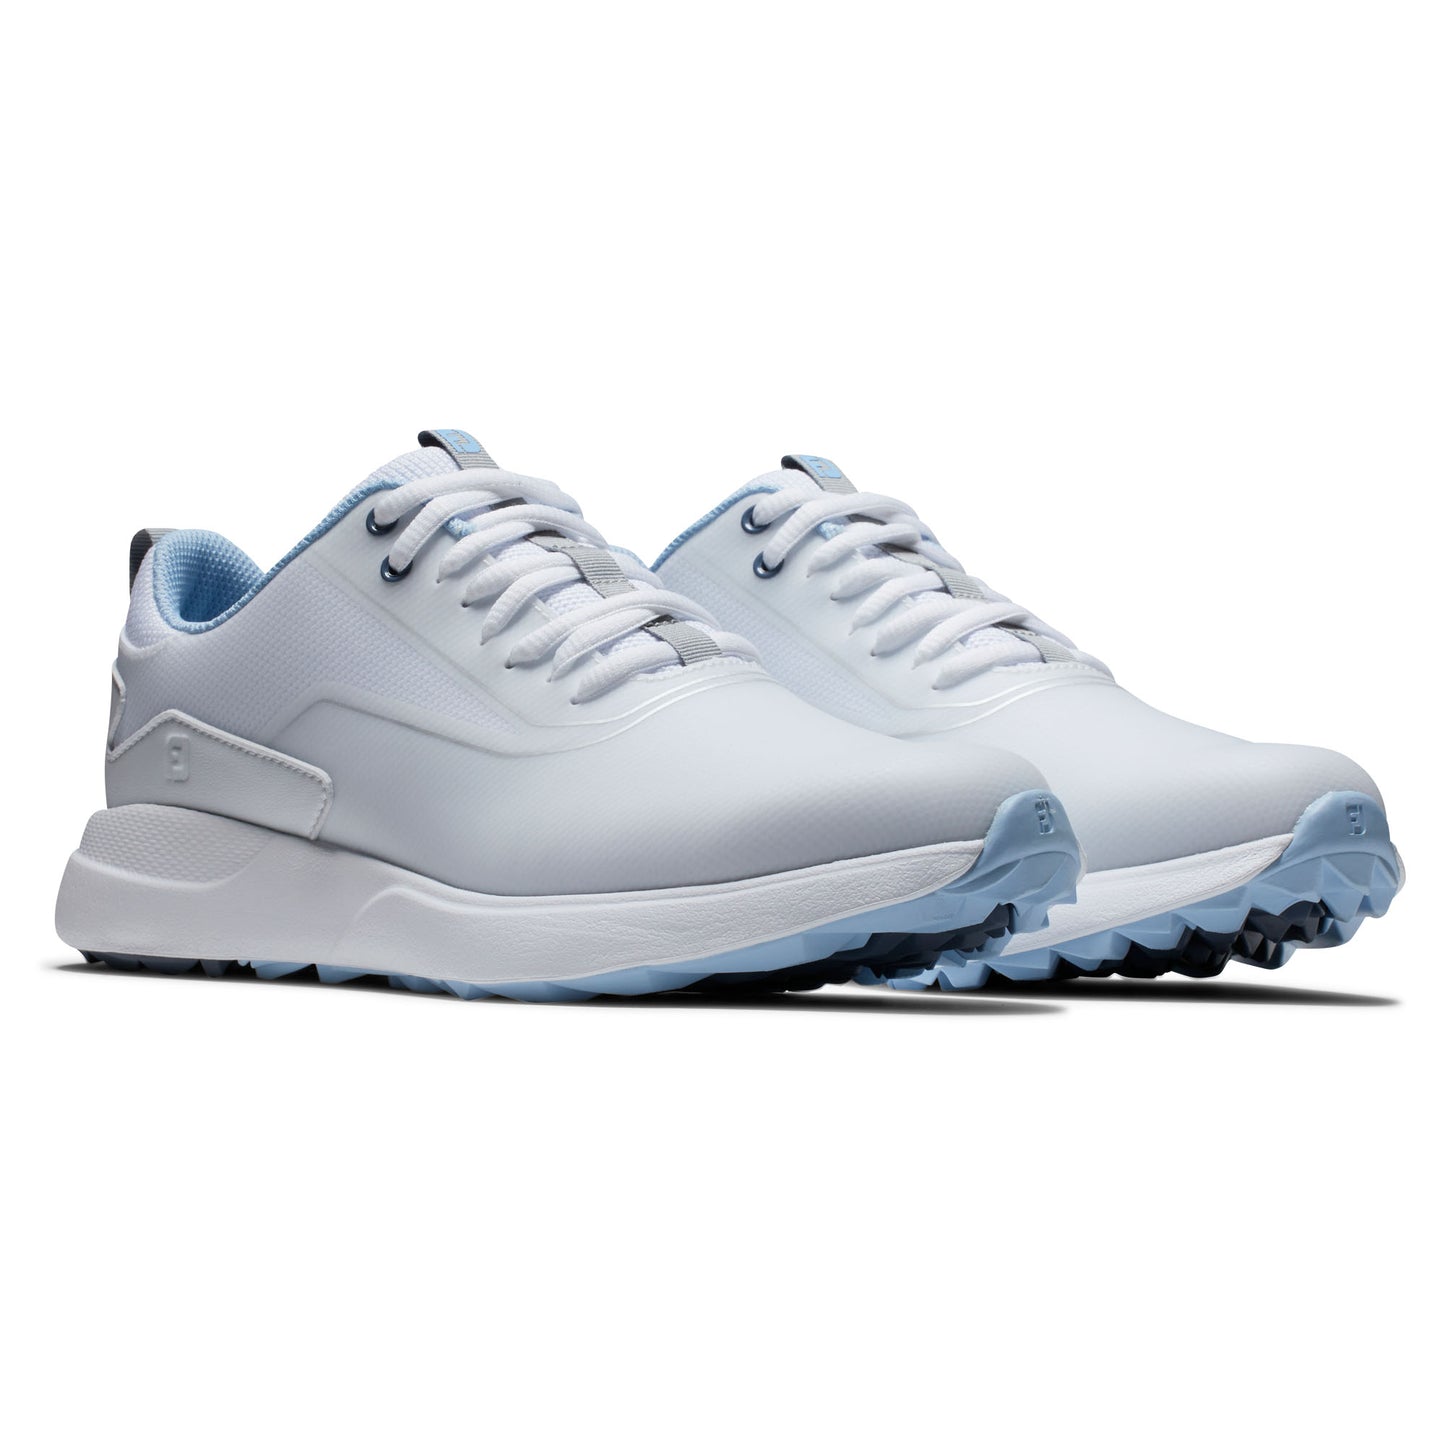 FootJoy Ladies Wide Fit Waterproof Performa Spikeless Golf Shoes in White & Blue